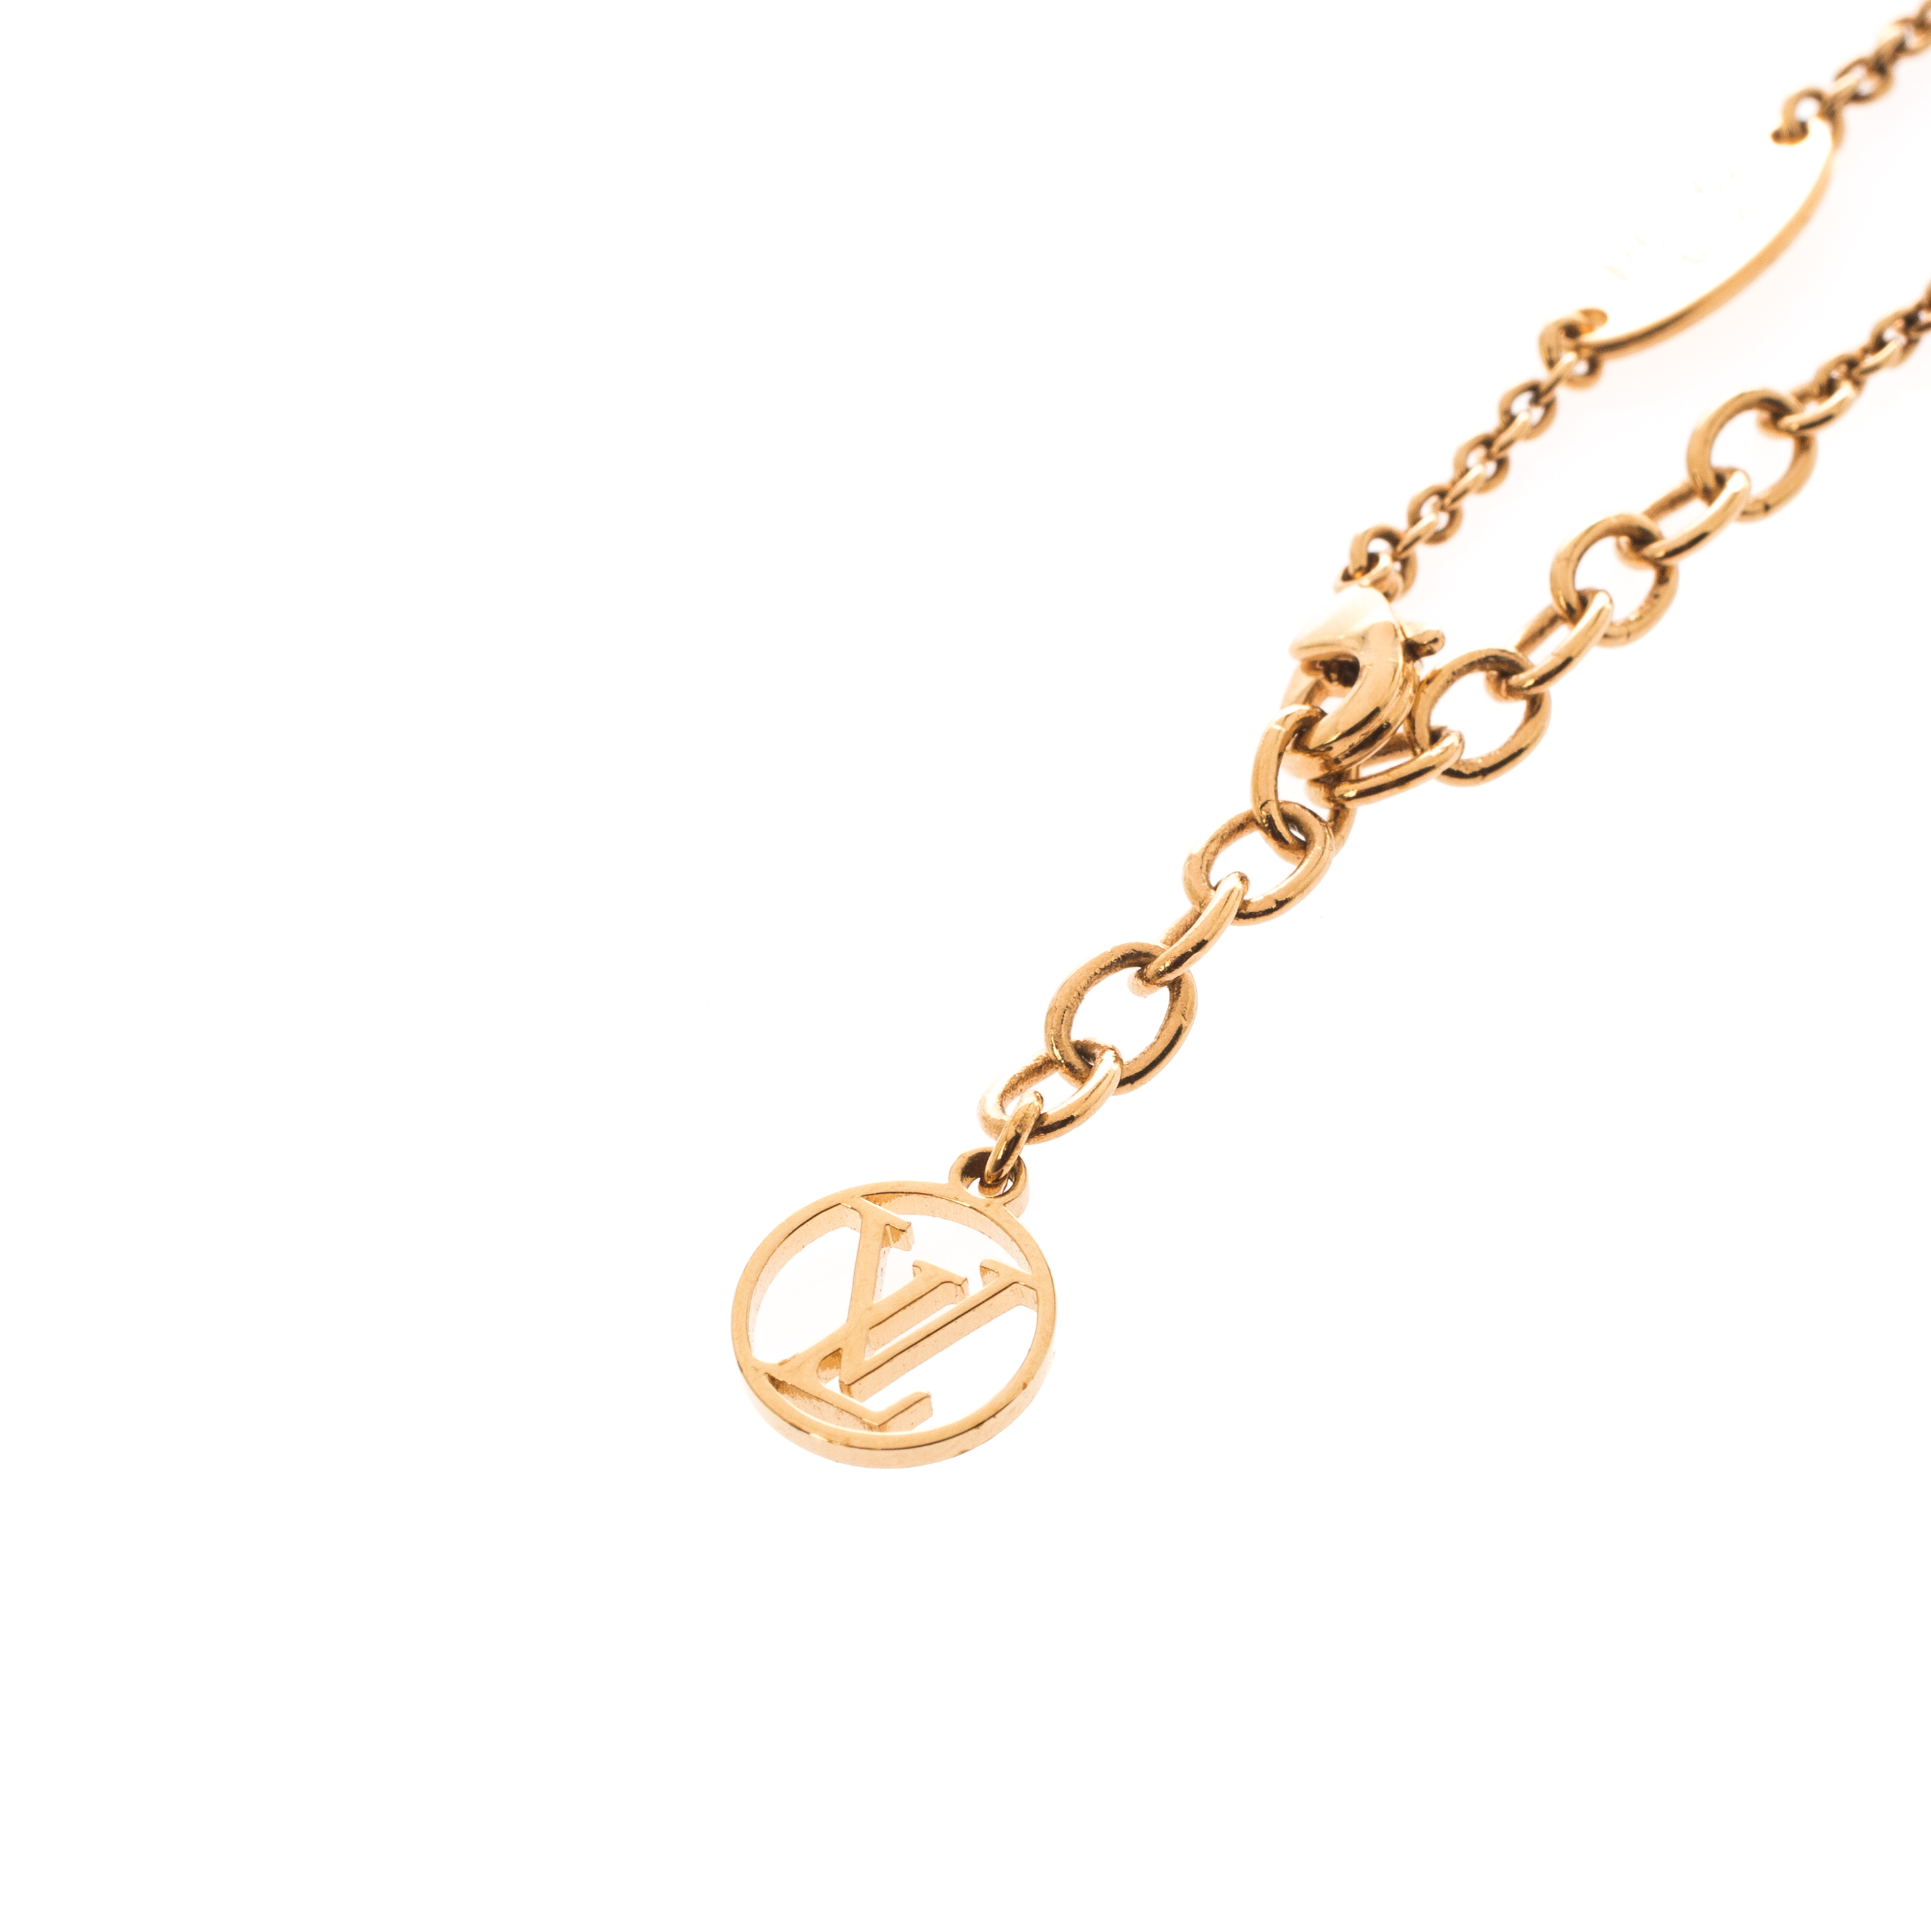 Alphabet lv&me bracelet Louis Vuitton Gold in Silver Plated - 29564729